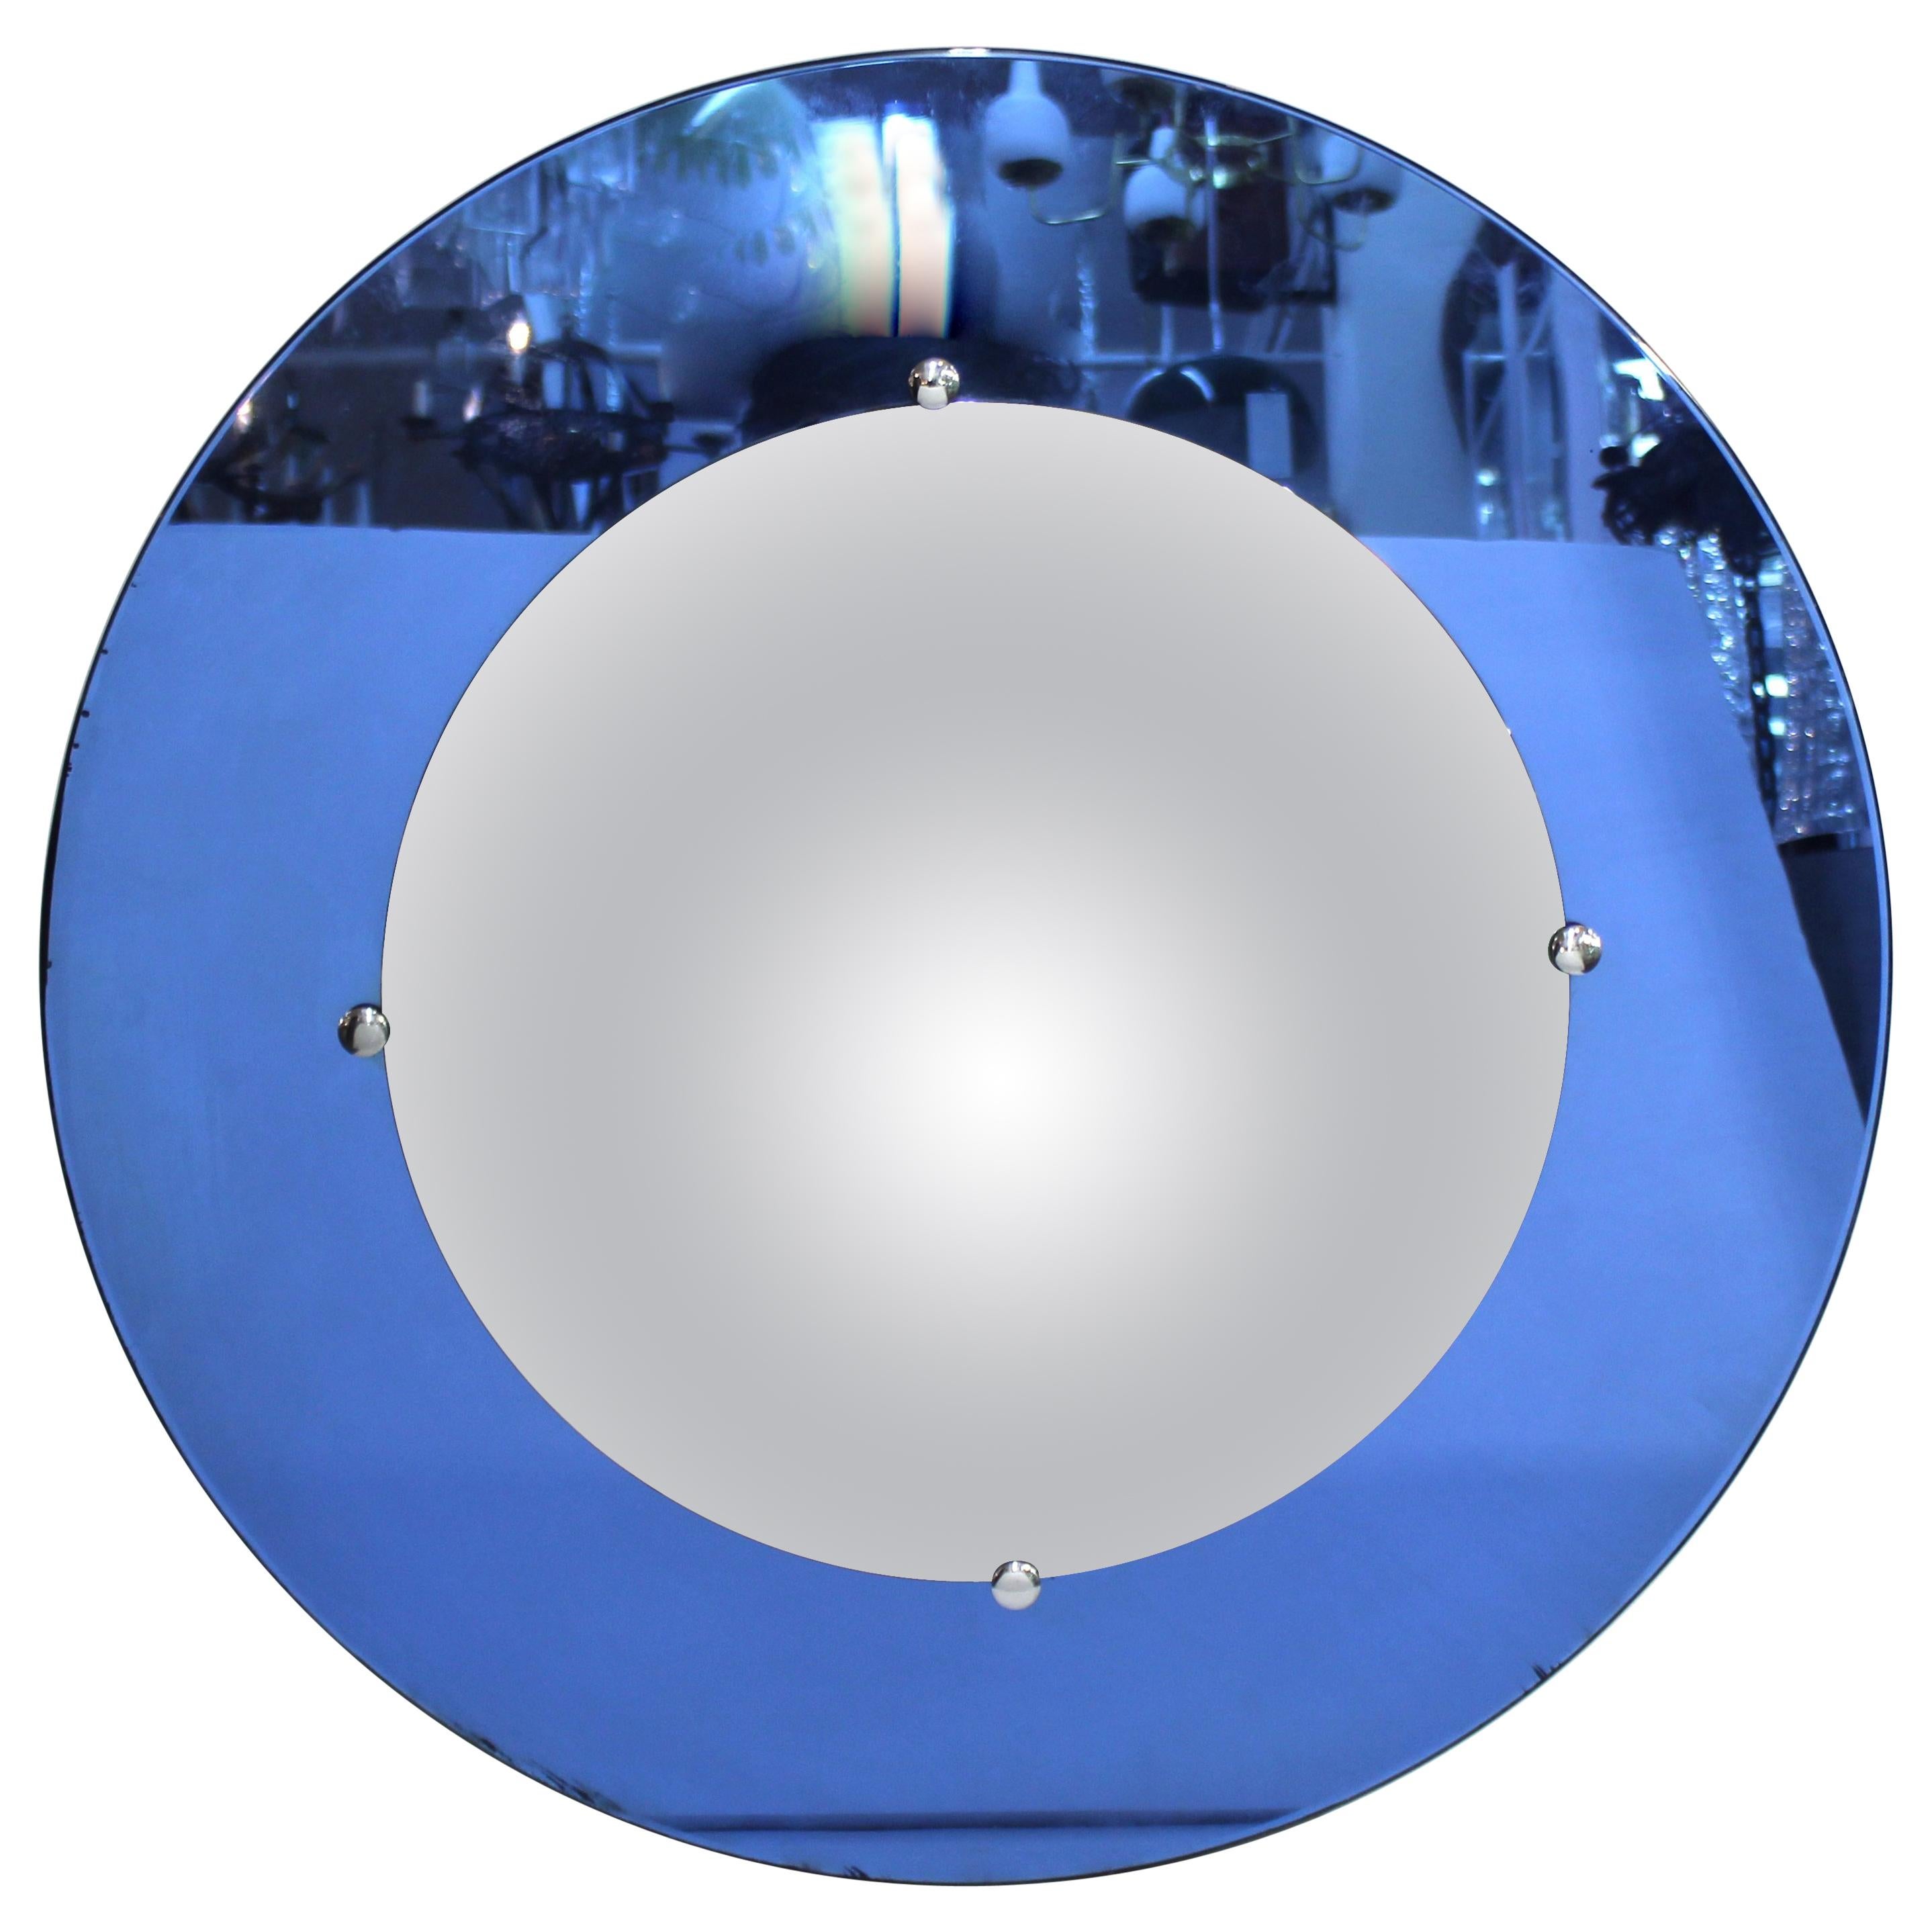 Art Deco Convex Circular Mirror with Blue Border